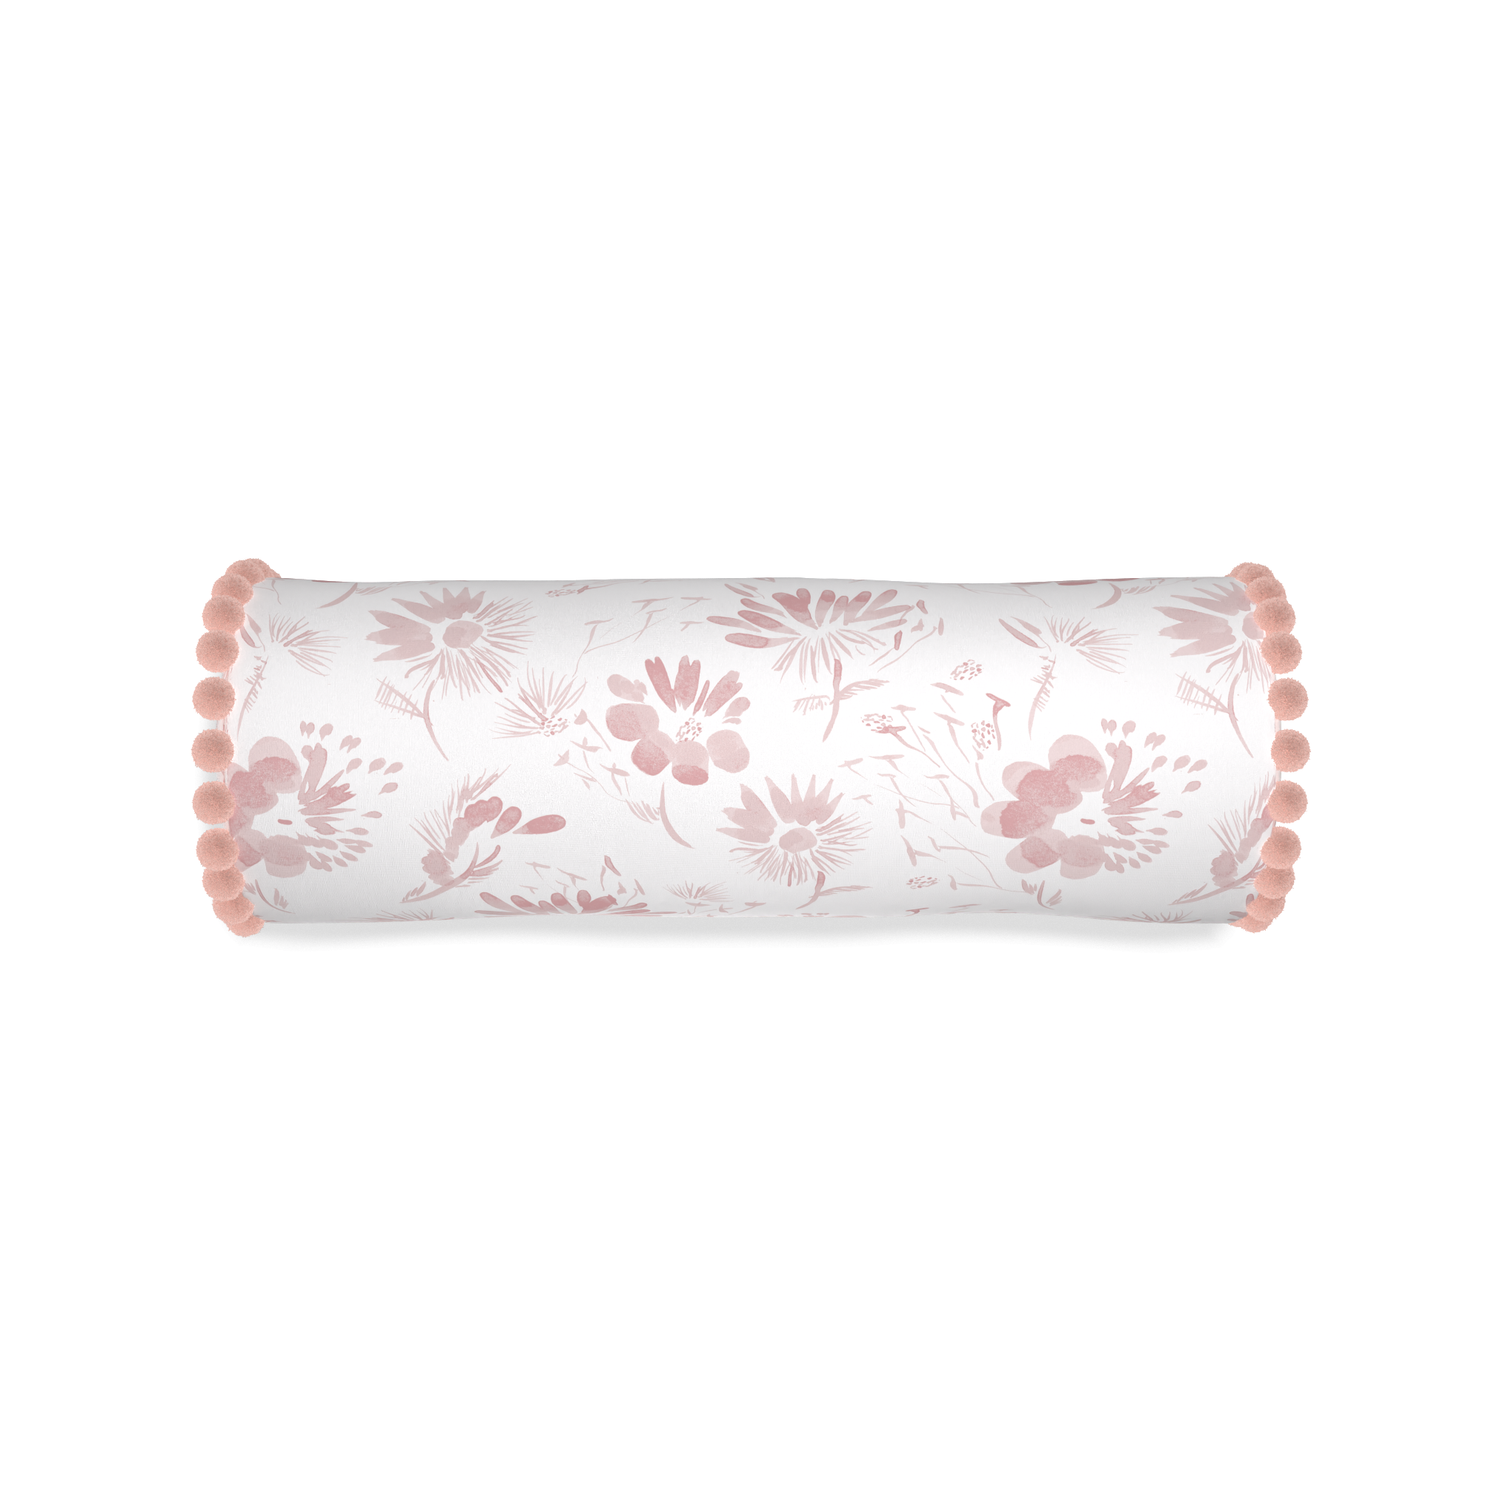 Bolster blake custom pink floralpillow with rose pom pom on white background